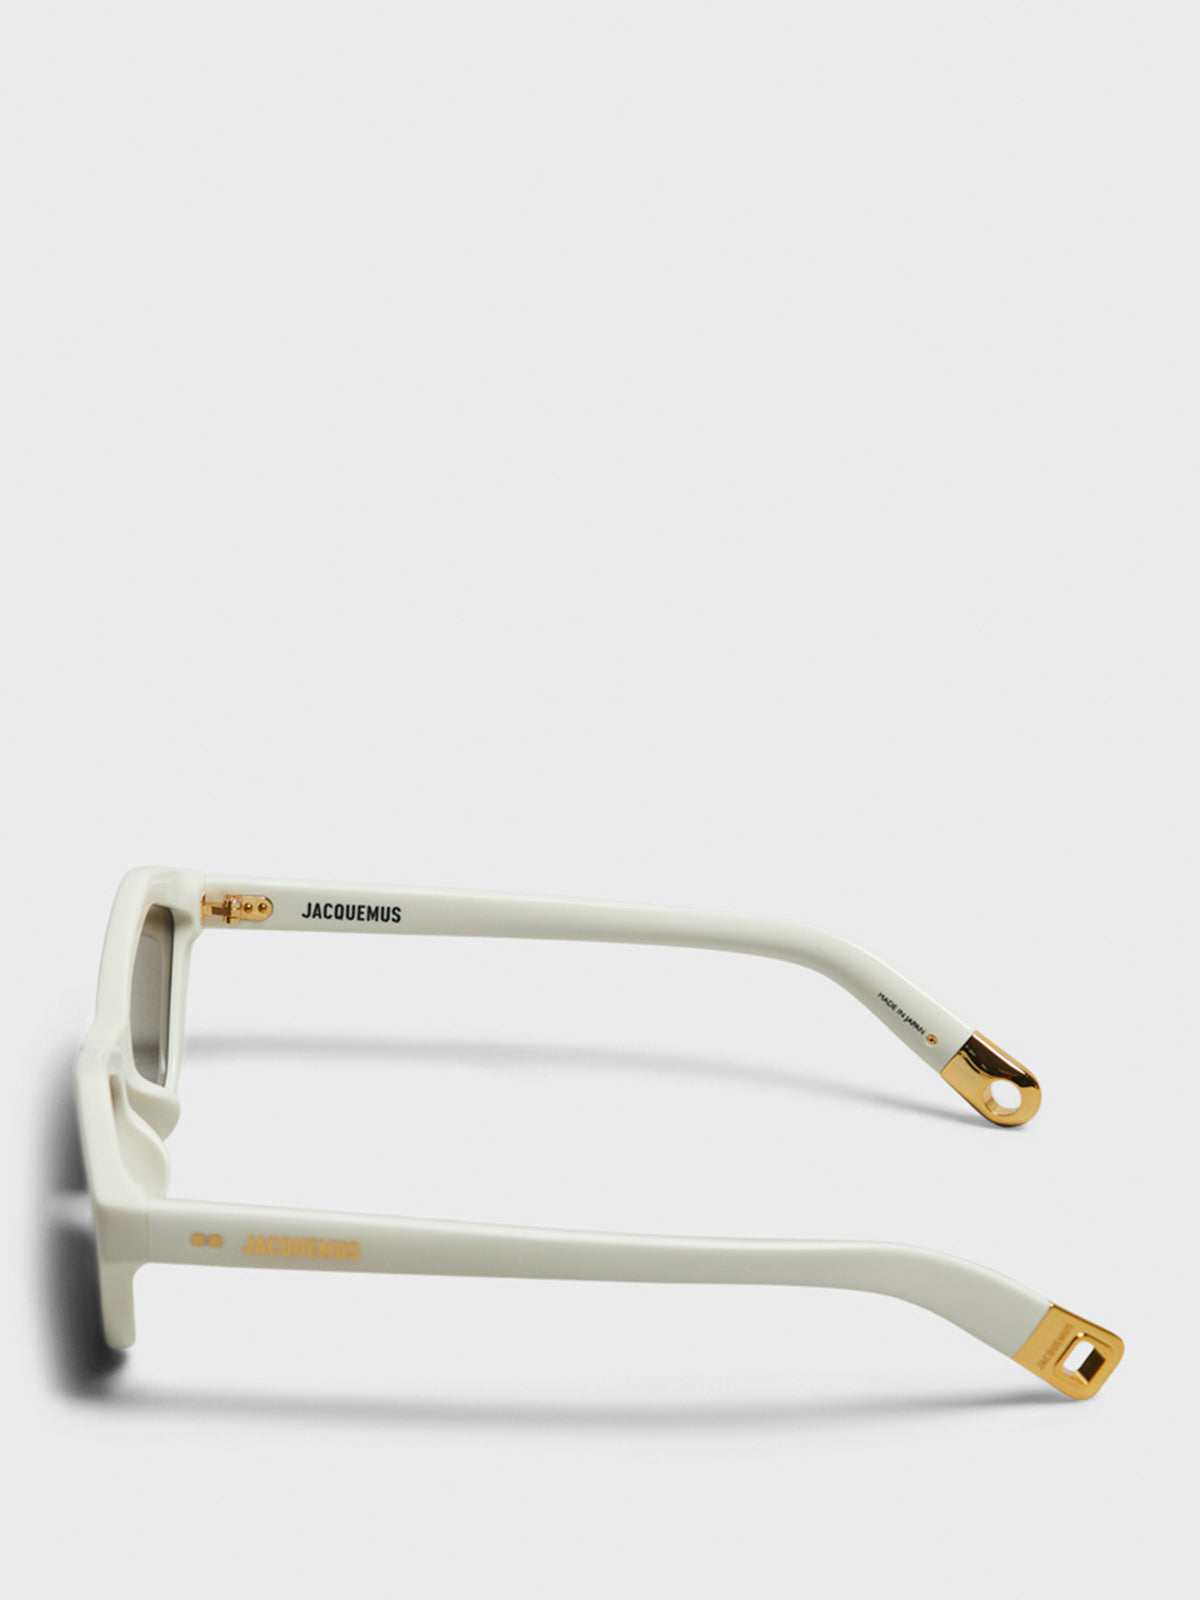 Bambino Sunglasses in White and Brown